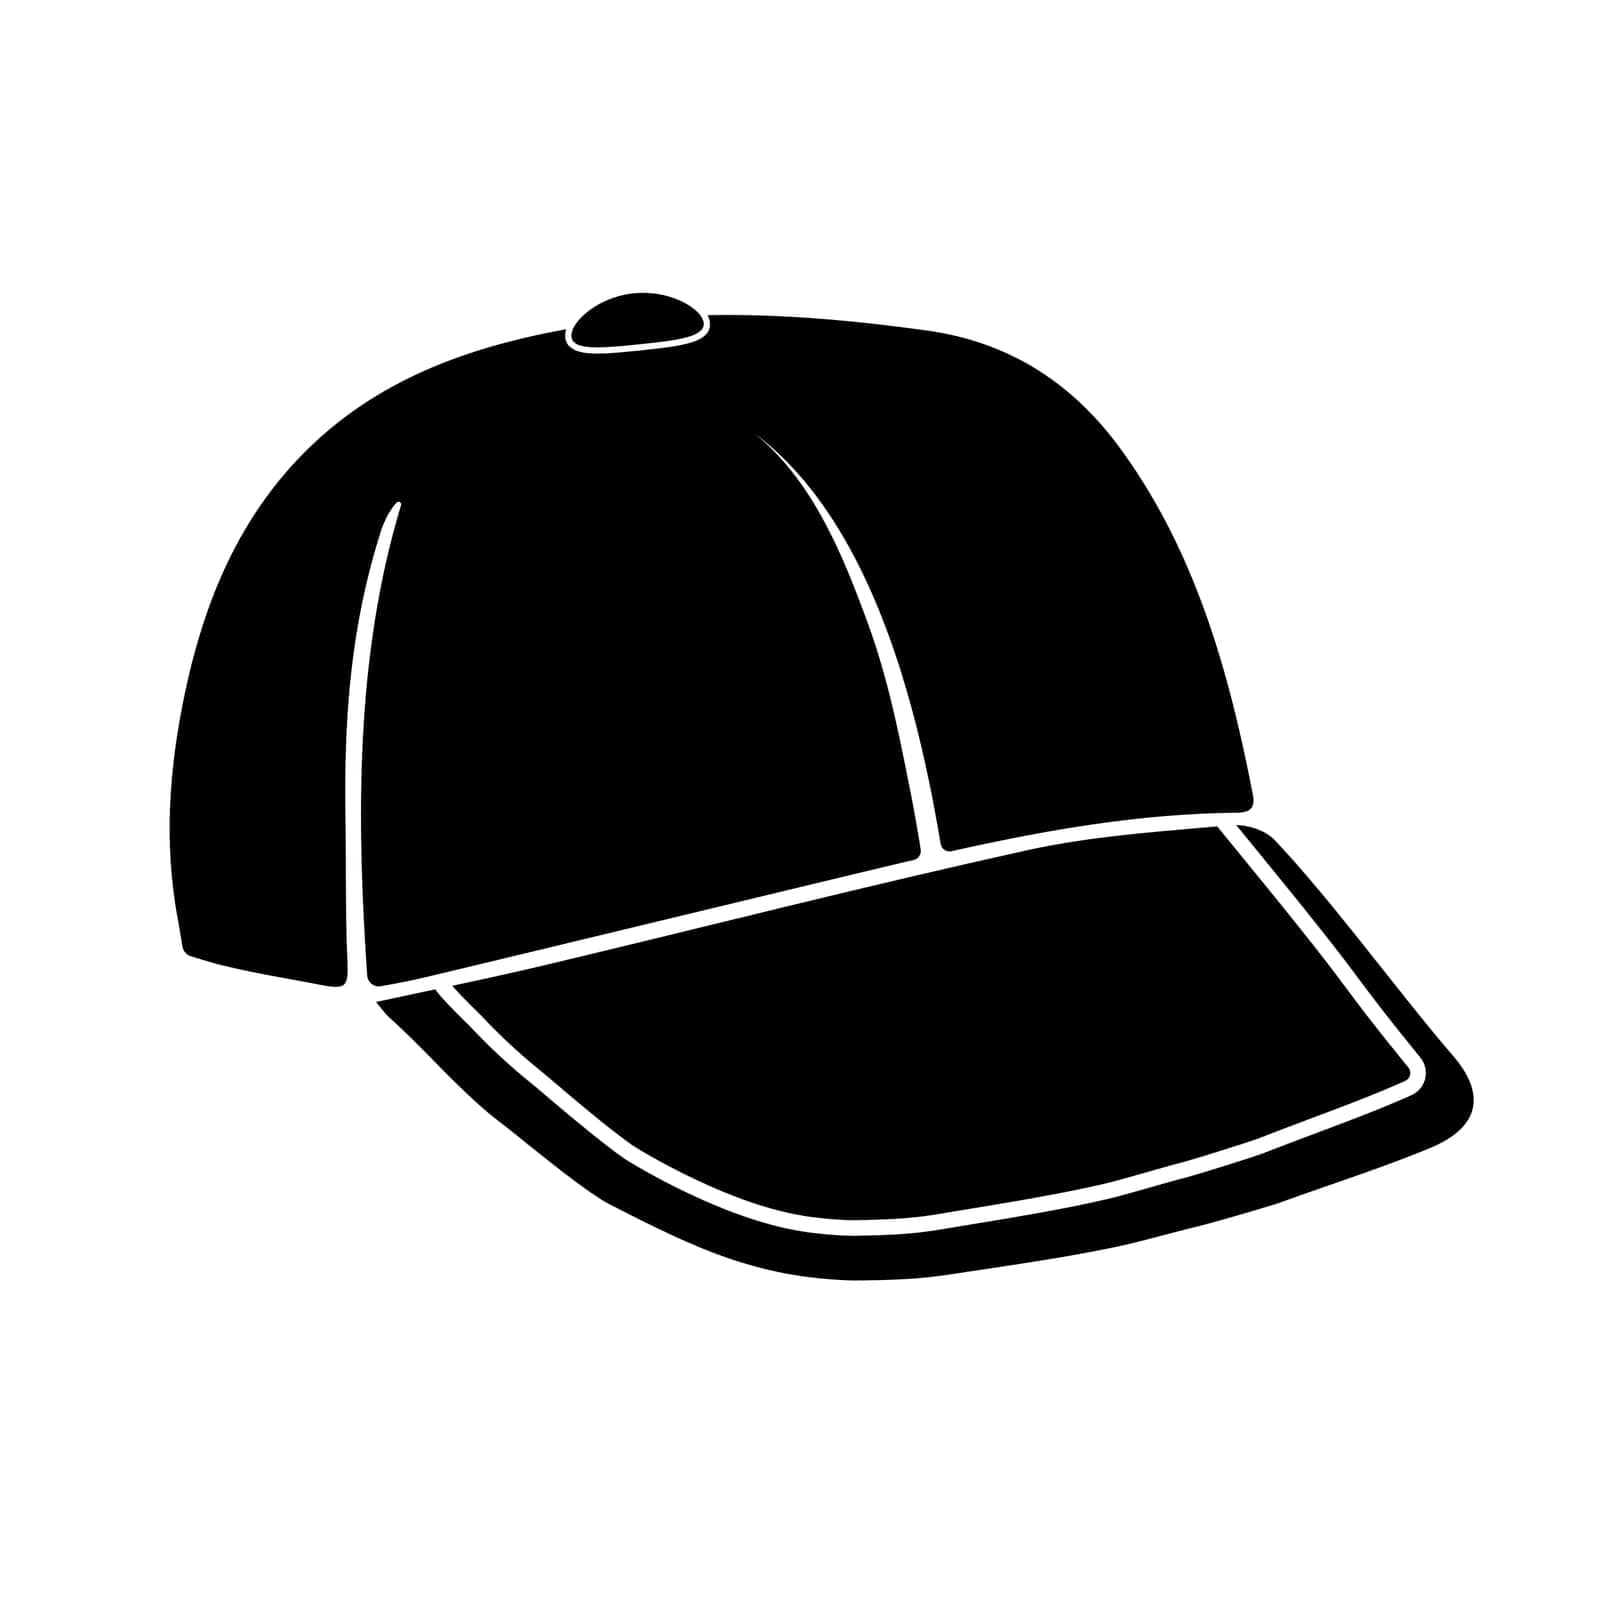 Baseball cap icon. Black baseball cap icon on white background. by Chekman